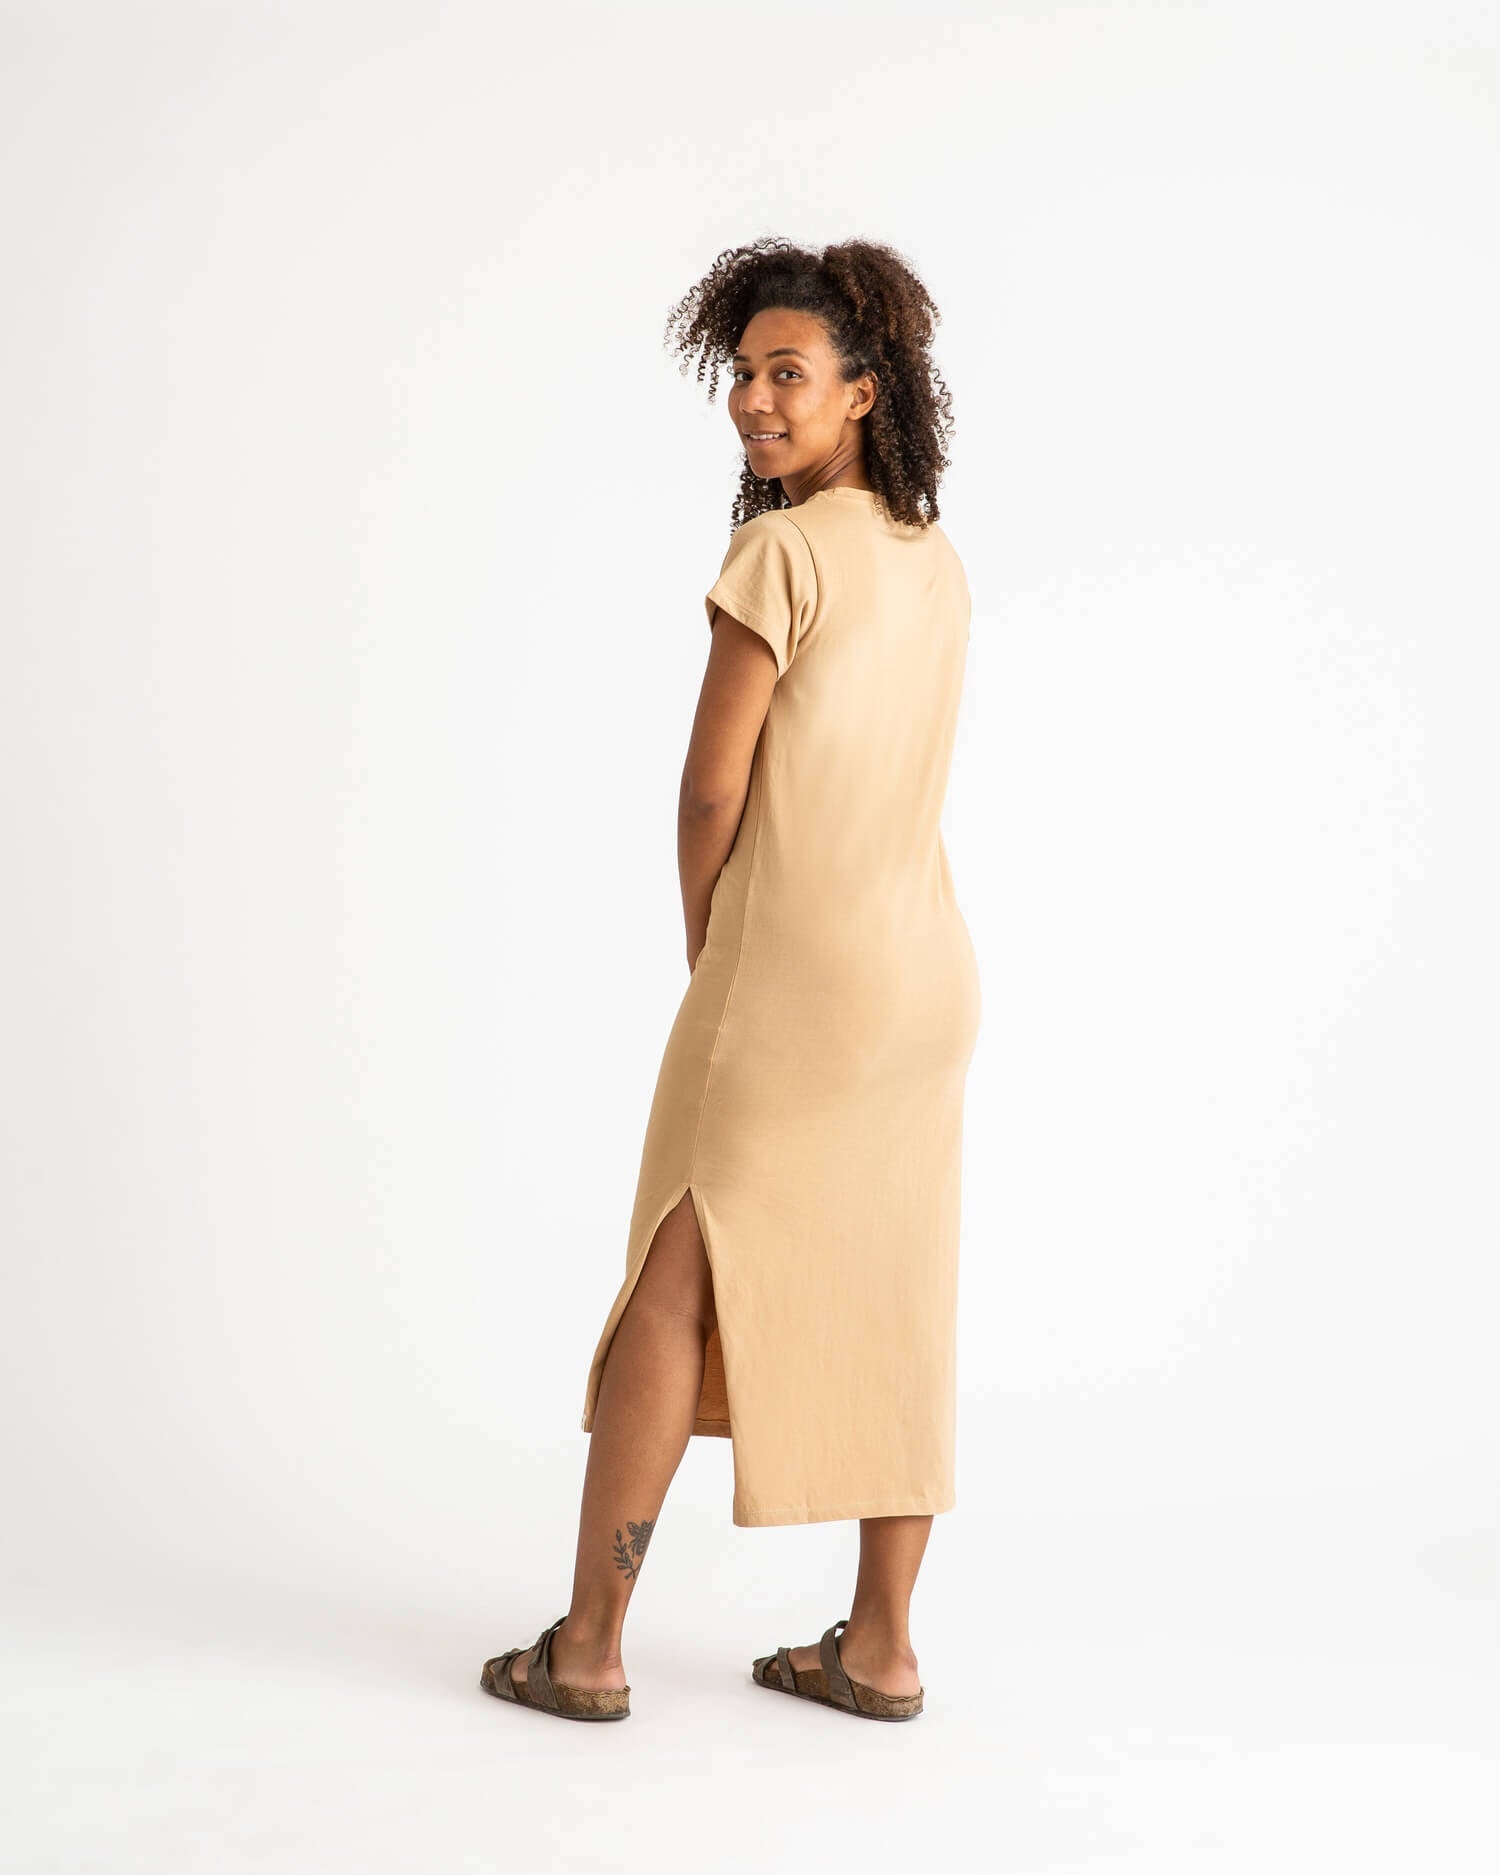 Light brown, short-sleeved dress made of organic cotton from Matona